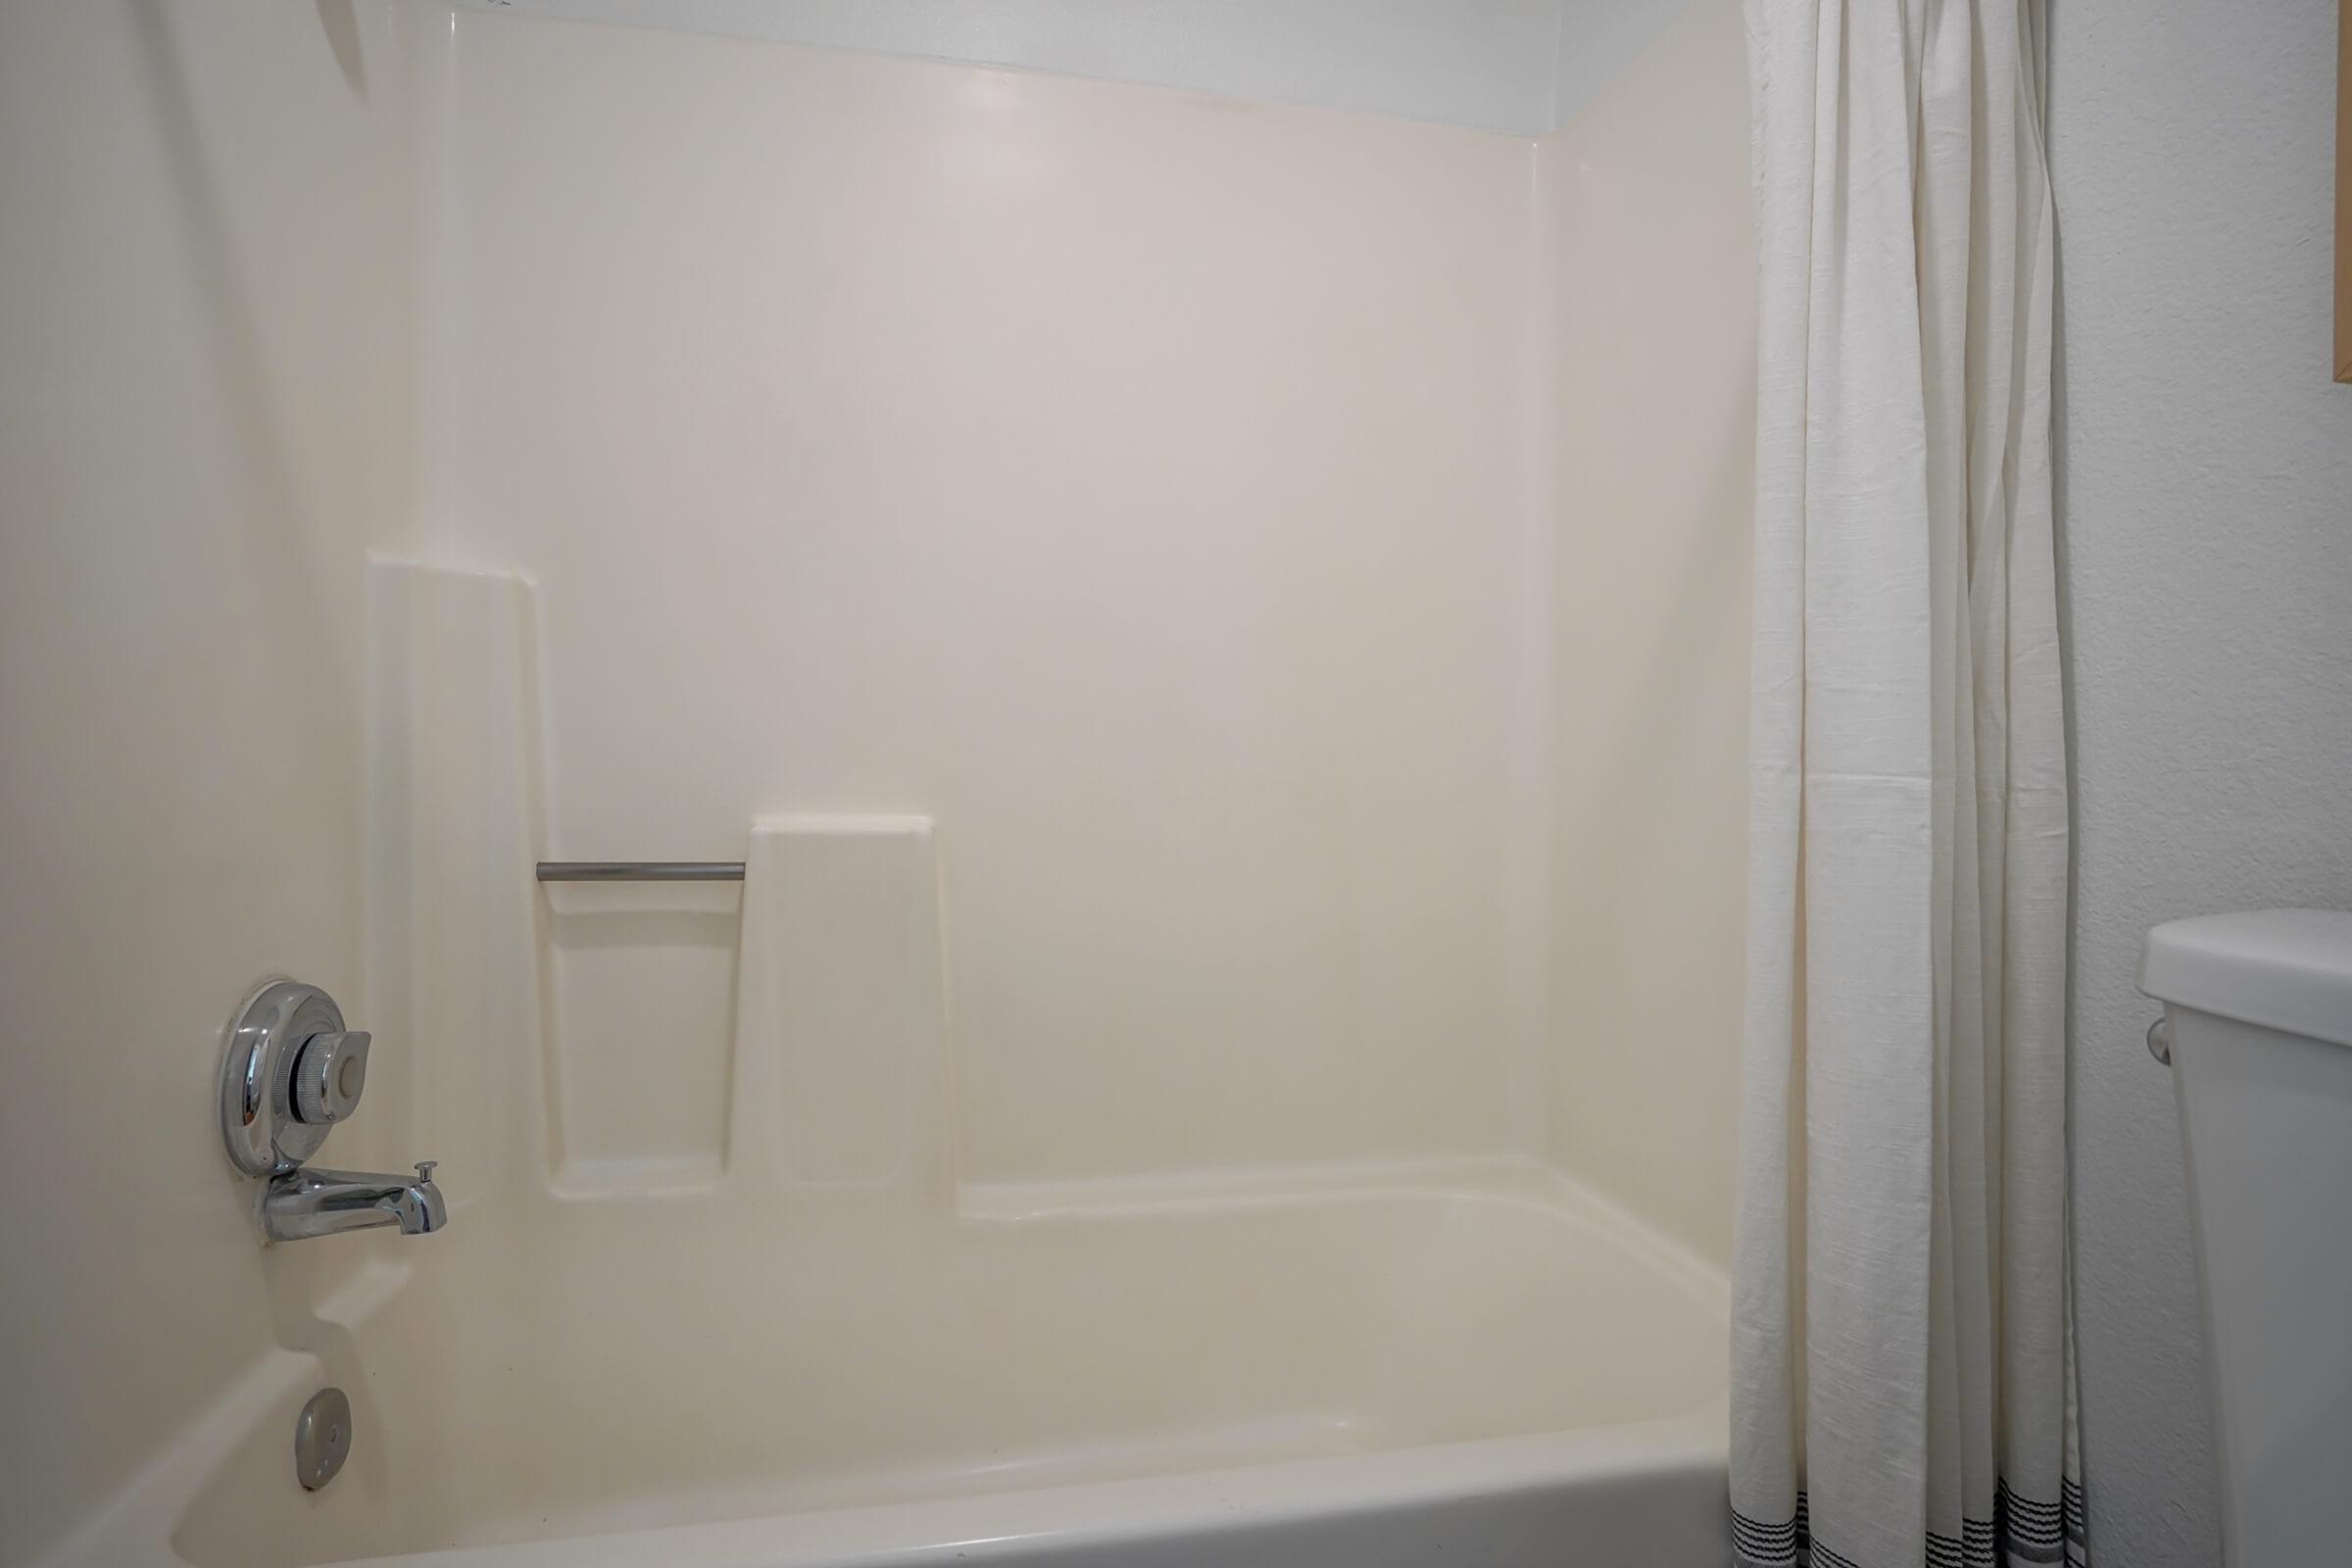 Bathroom with Bathtub - Treehouse Apartments - Albuquerque - New Mexico